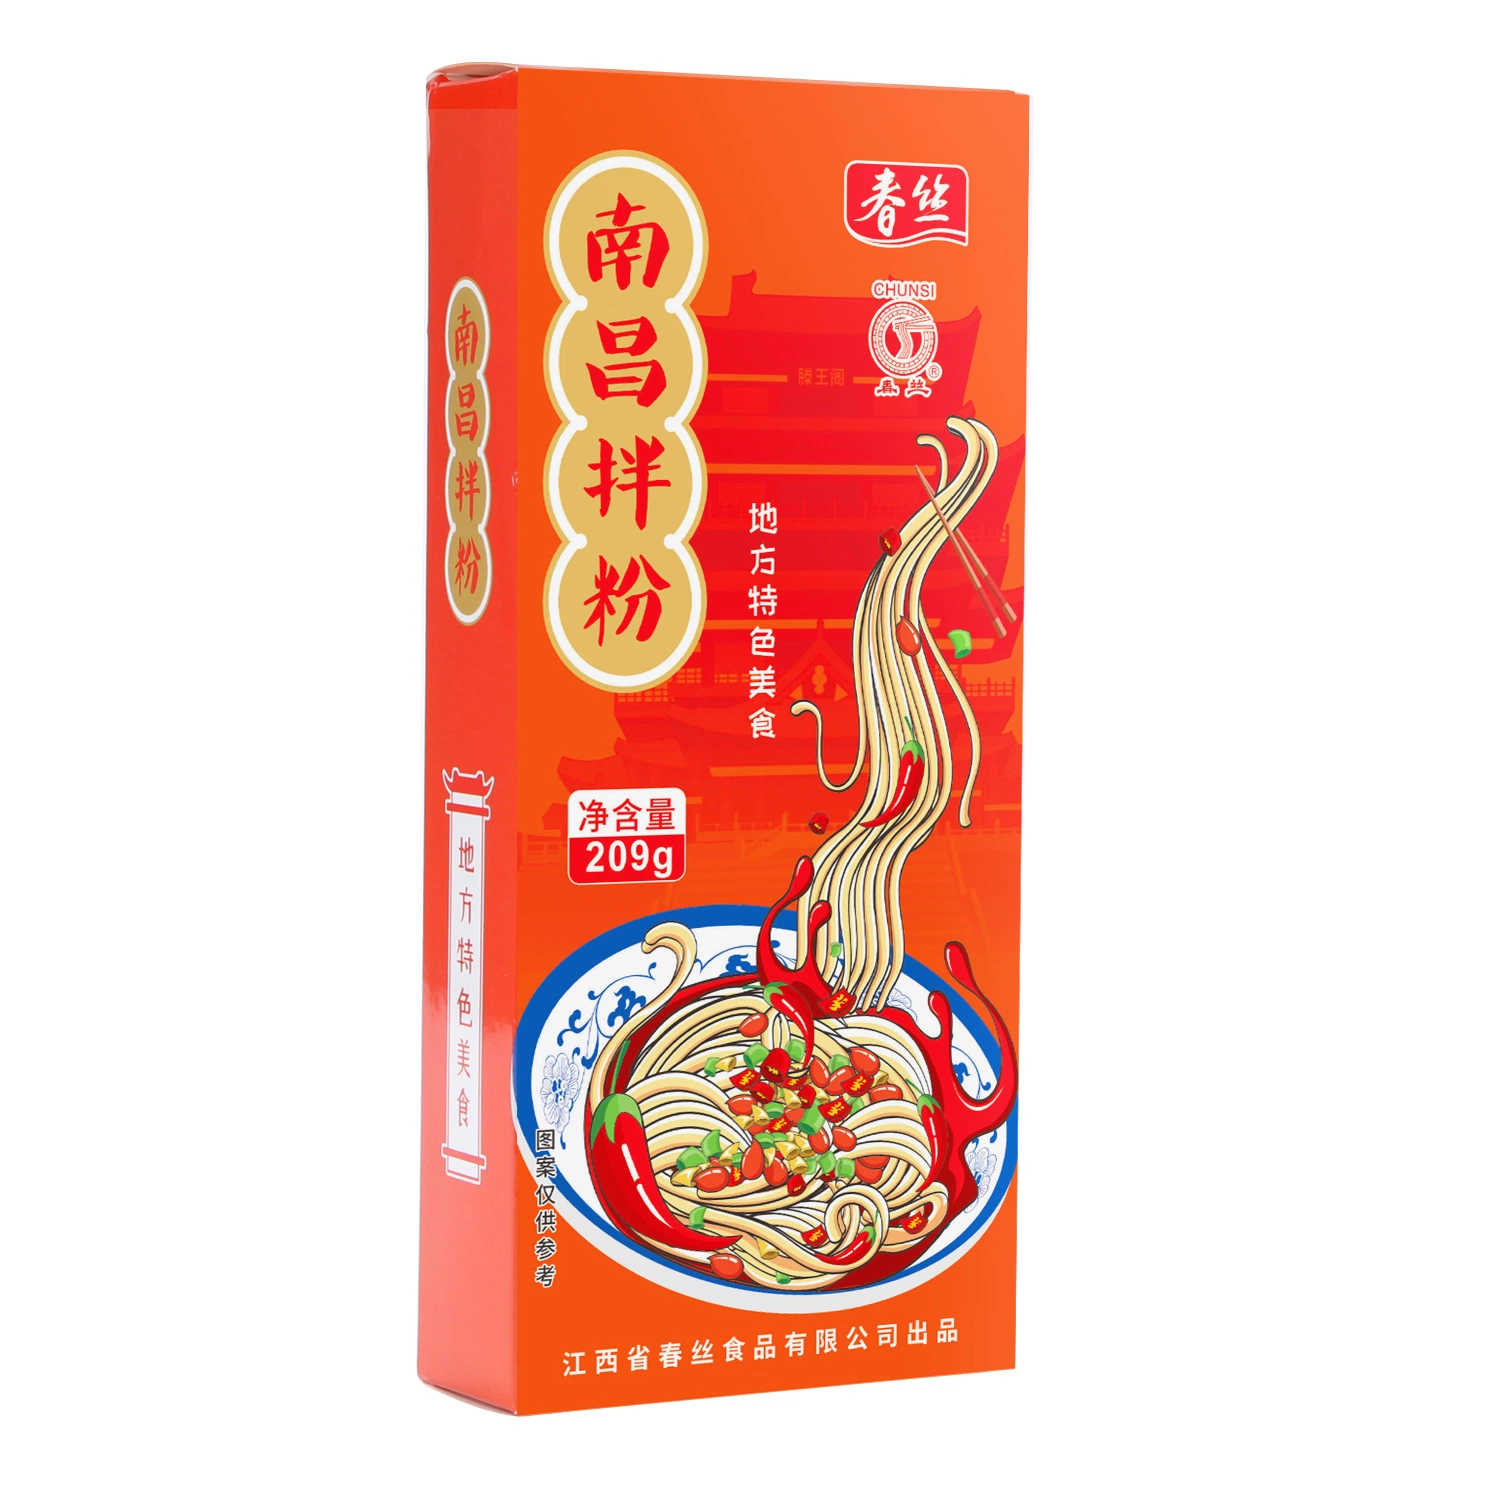 Chunsi Nanchang Instant Food Würzige Lokale Delikatessen Mischmehl Reis Vermicelli Hot Selling